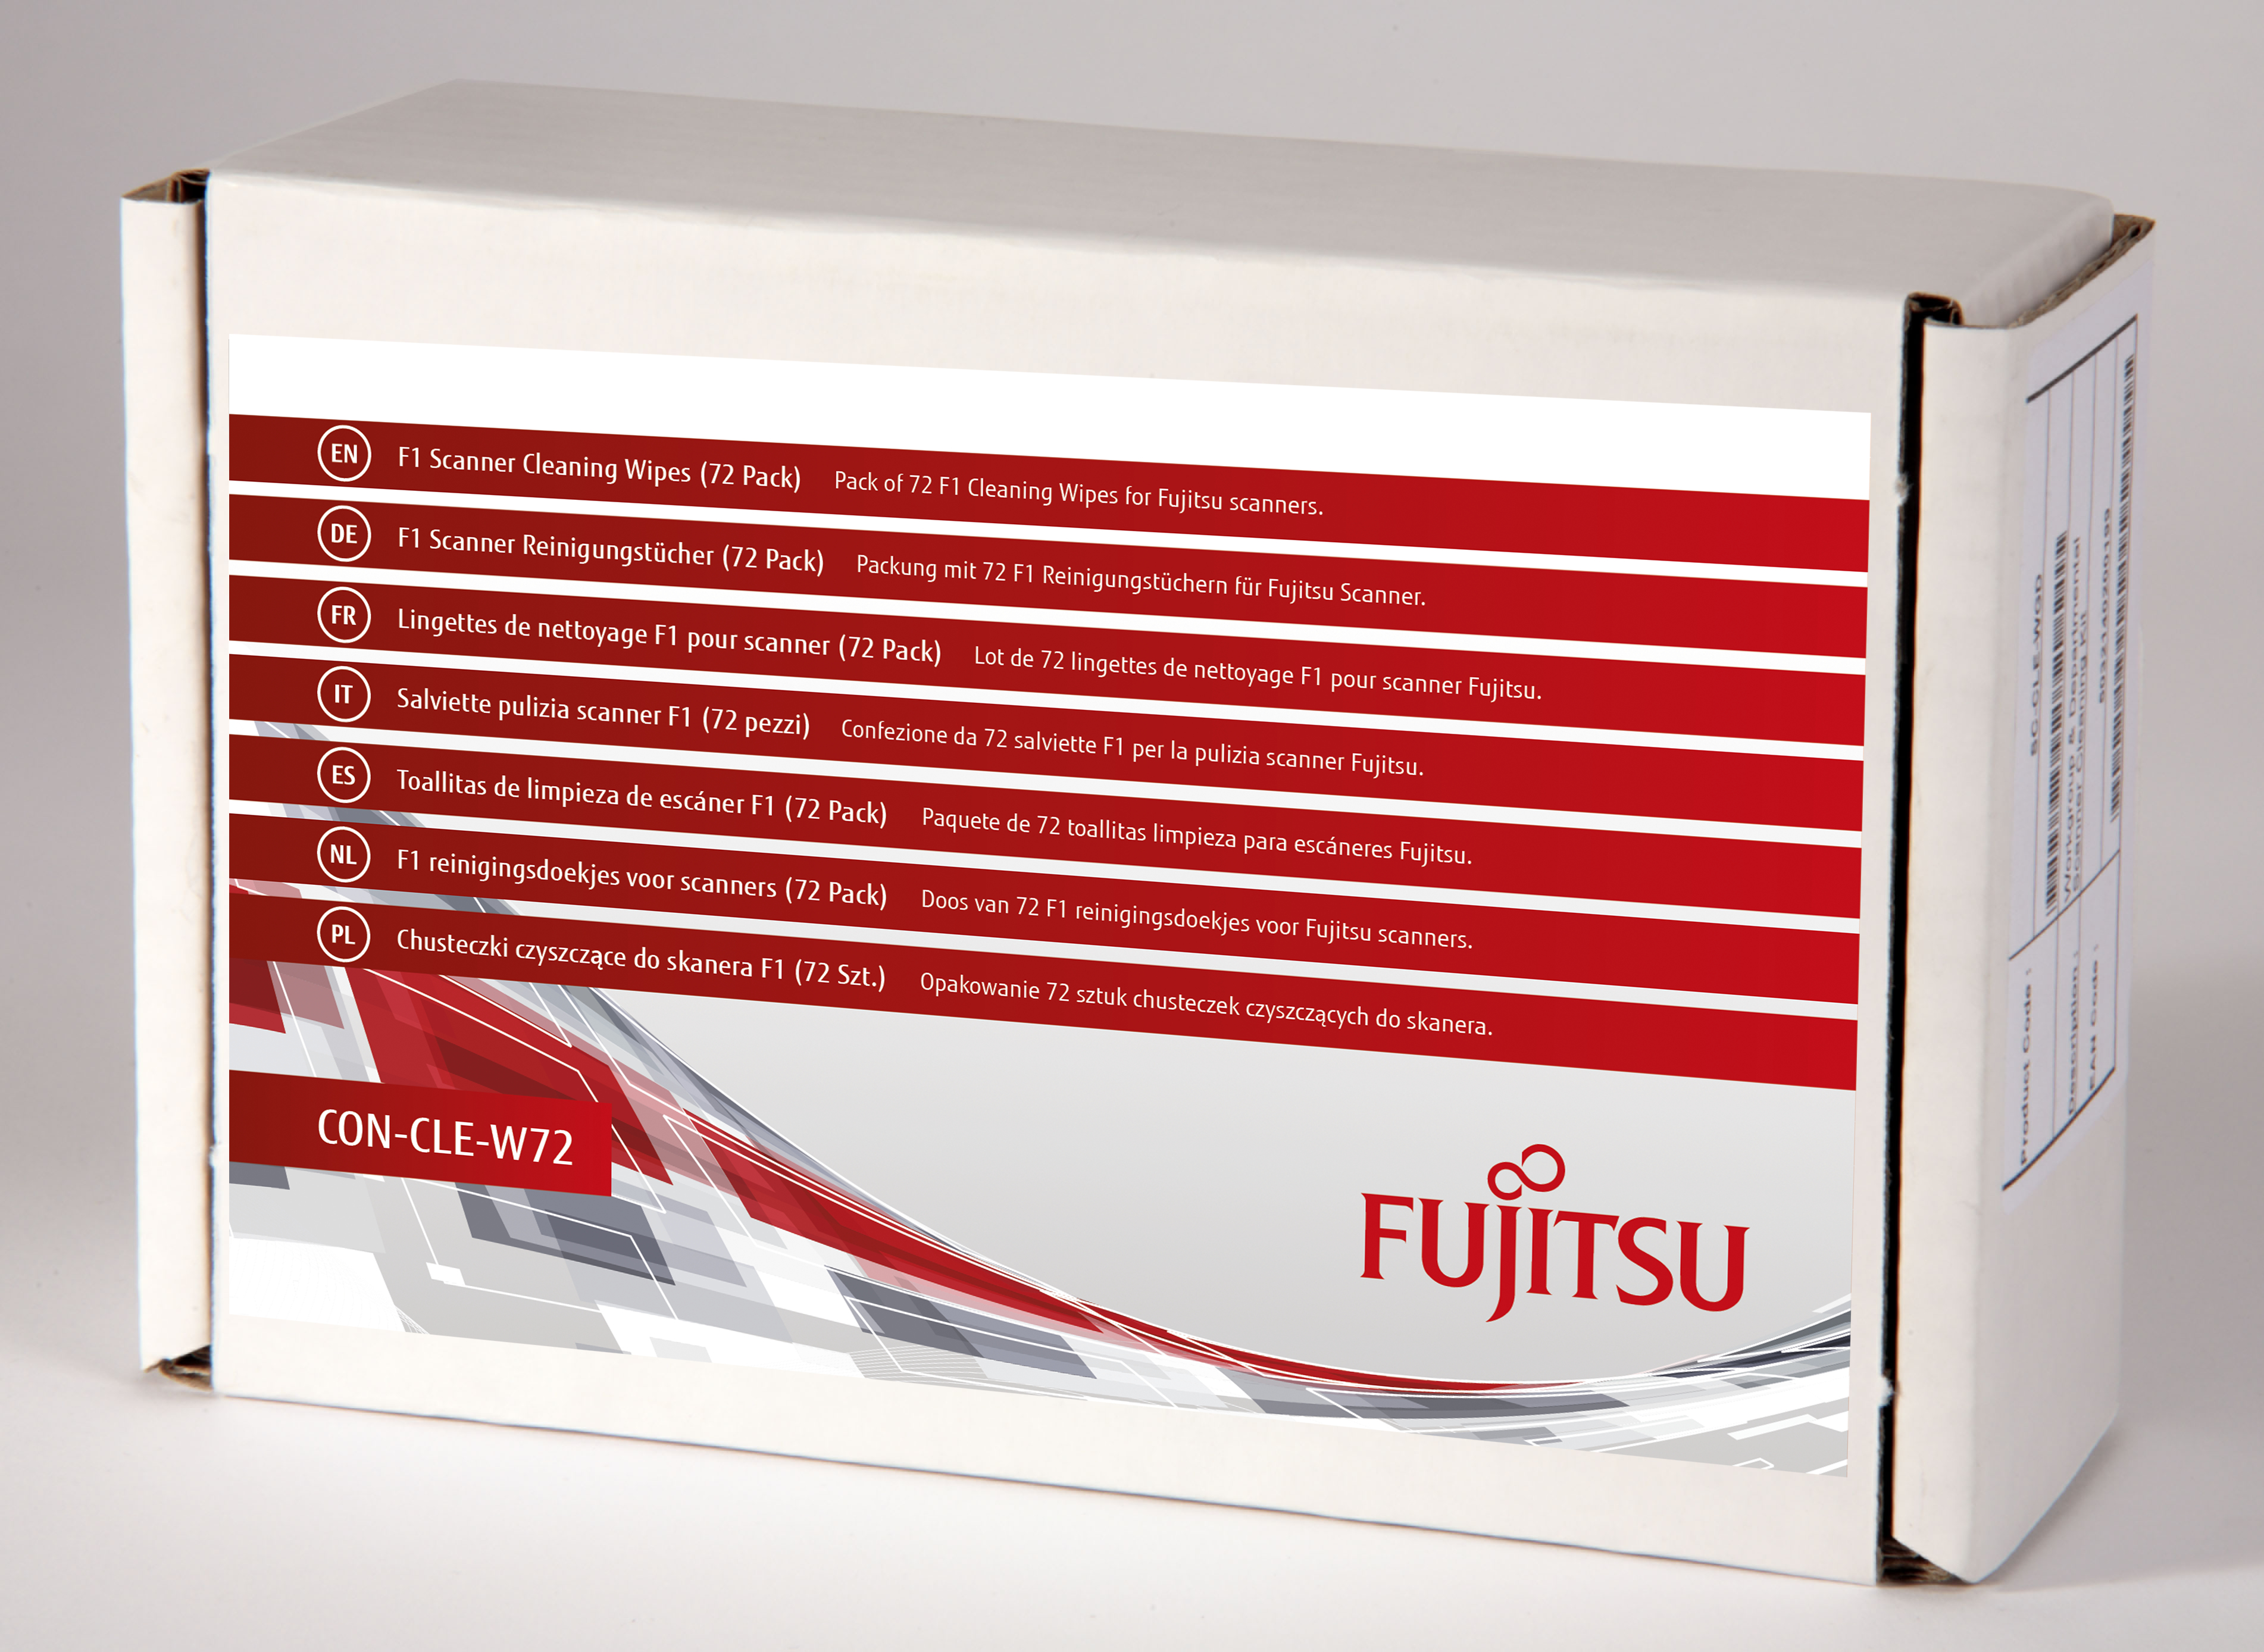 Fujitsu F1 Scanner Cleaning Wipes